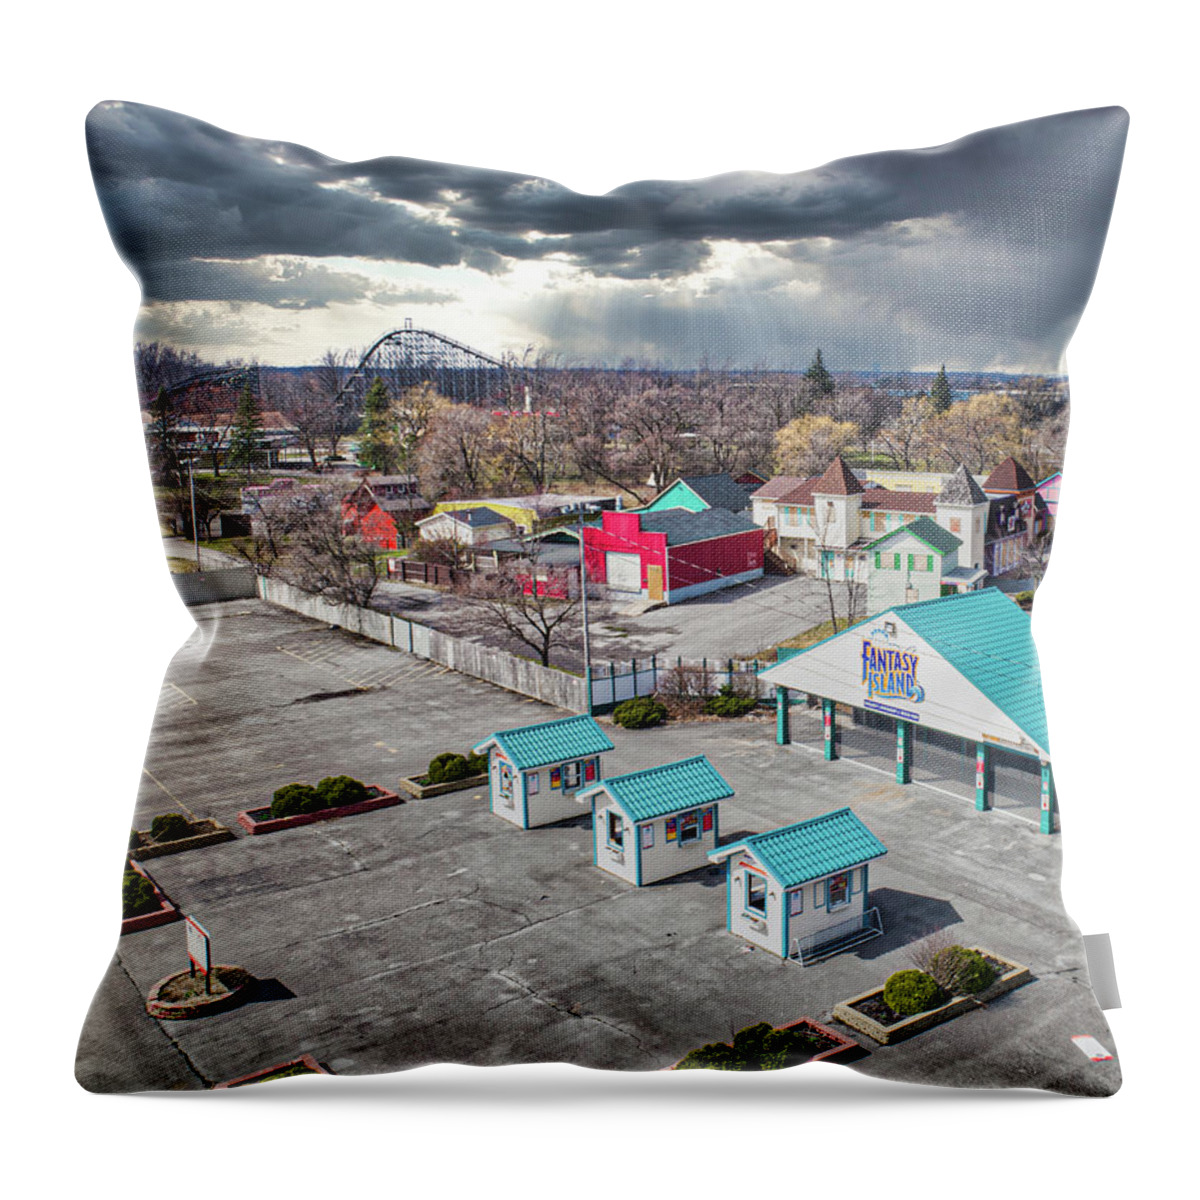 Fantasy Island Throw Pillow featuring the photograph Fantasy Island by John Angelo Lattanzio